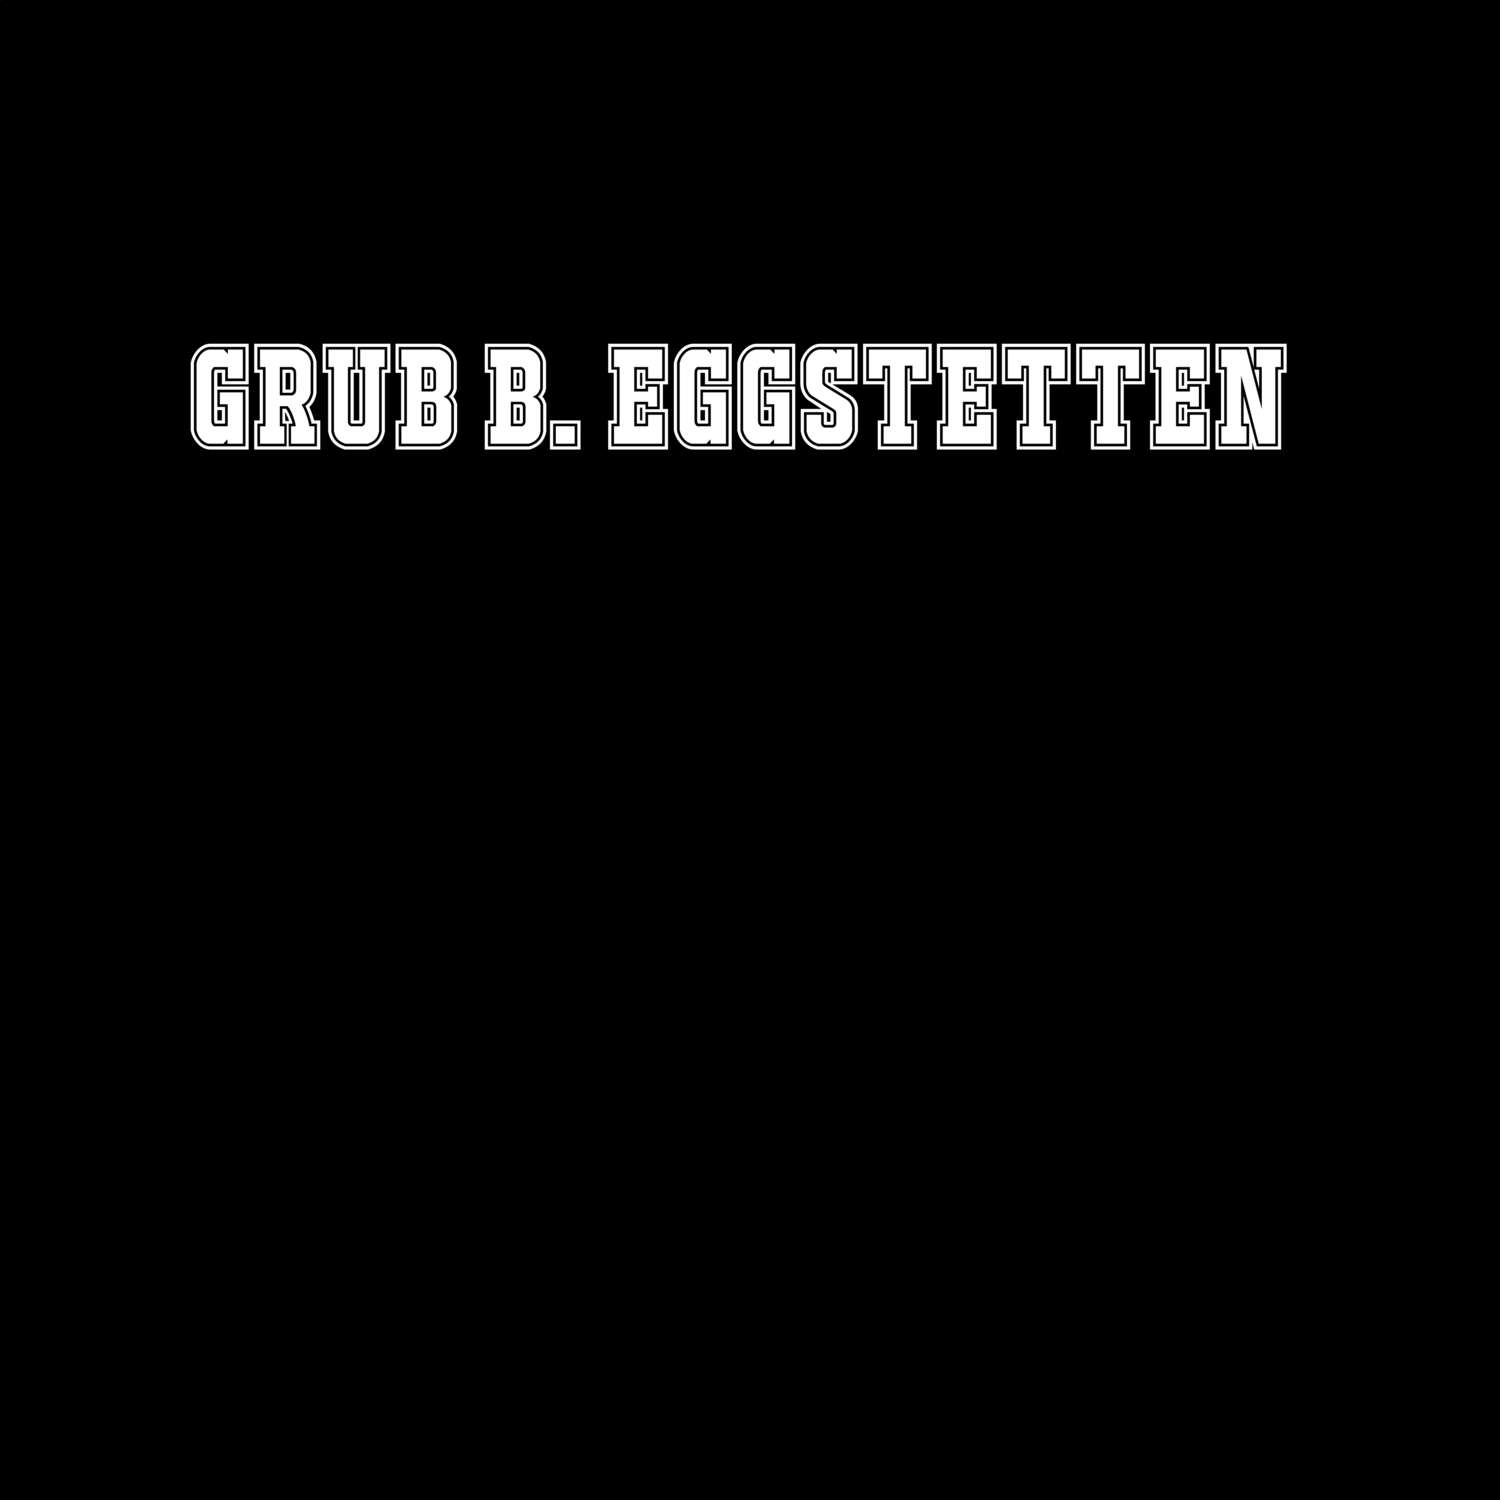 Grub b. Eggstetten T-Shirt »Classic«